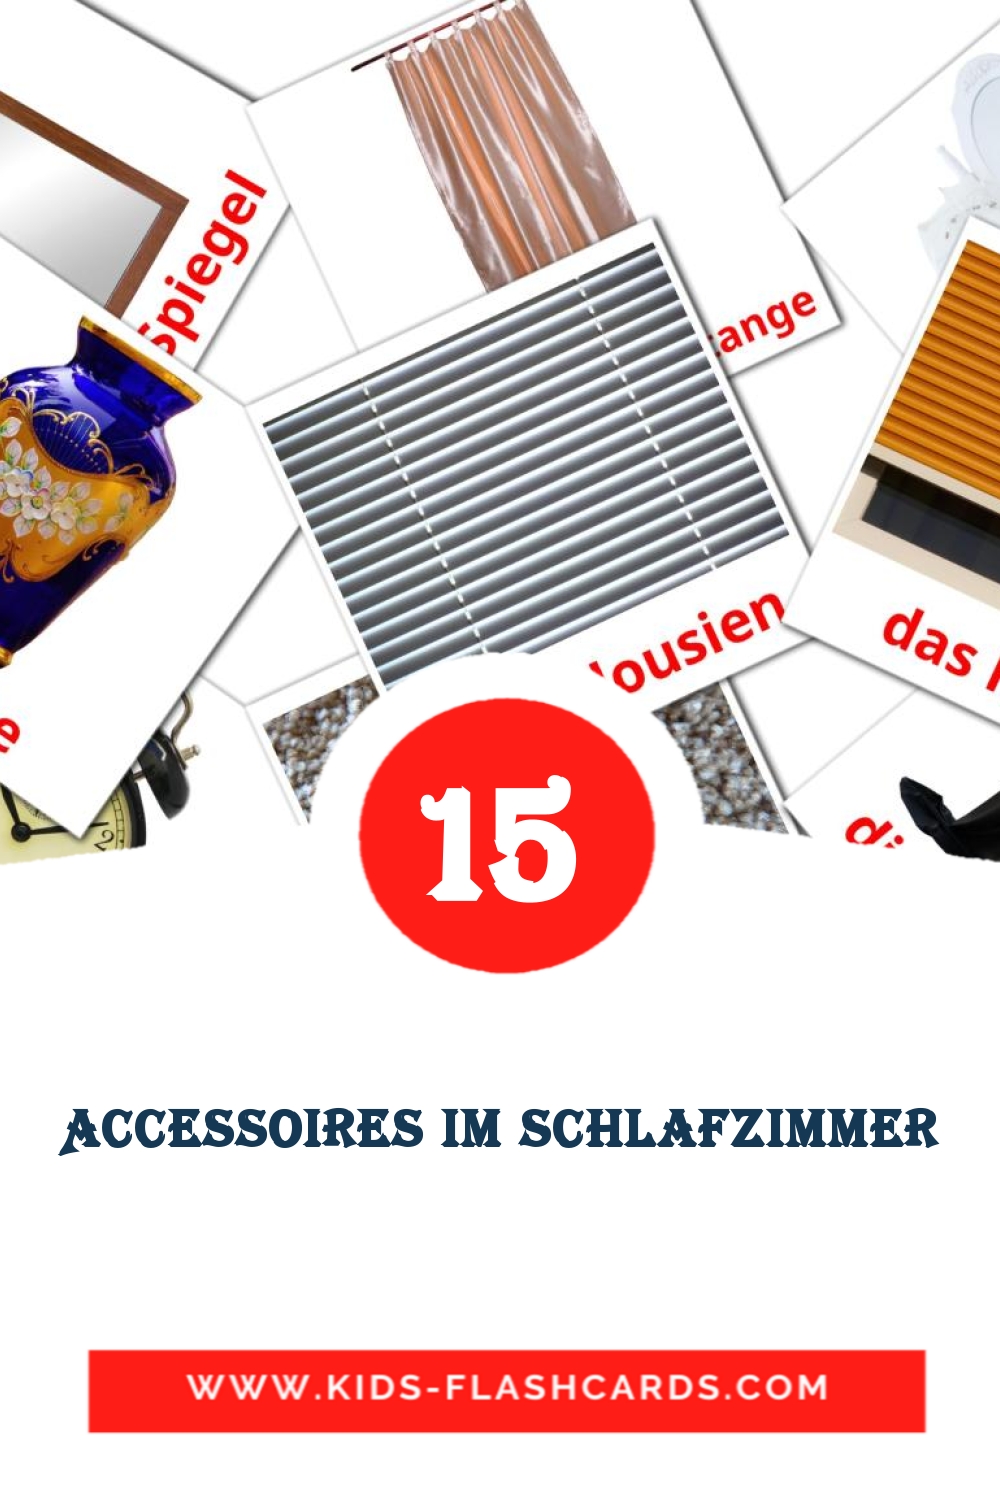 18 Accessoires im Schlafzimmer Picture Cards for Kindergarden in german